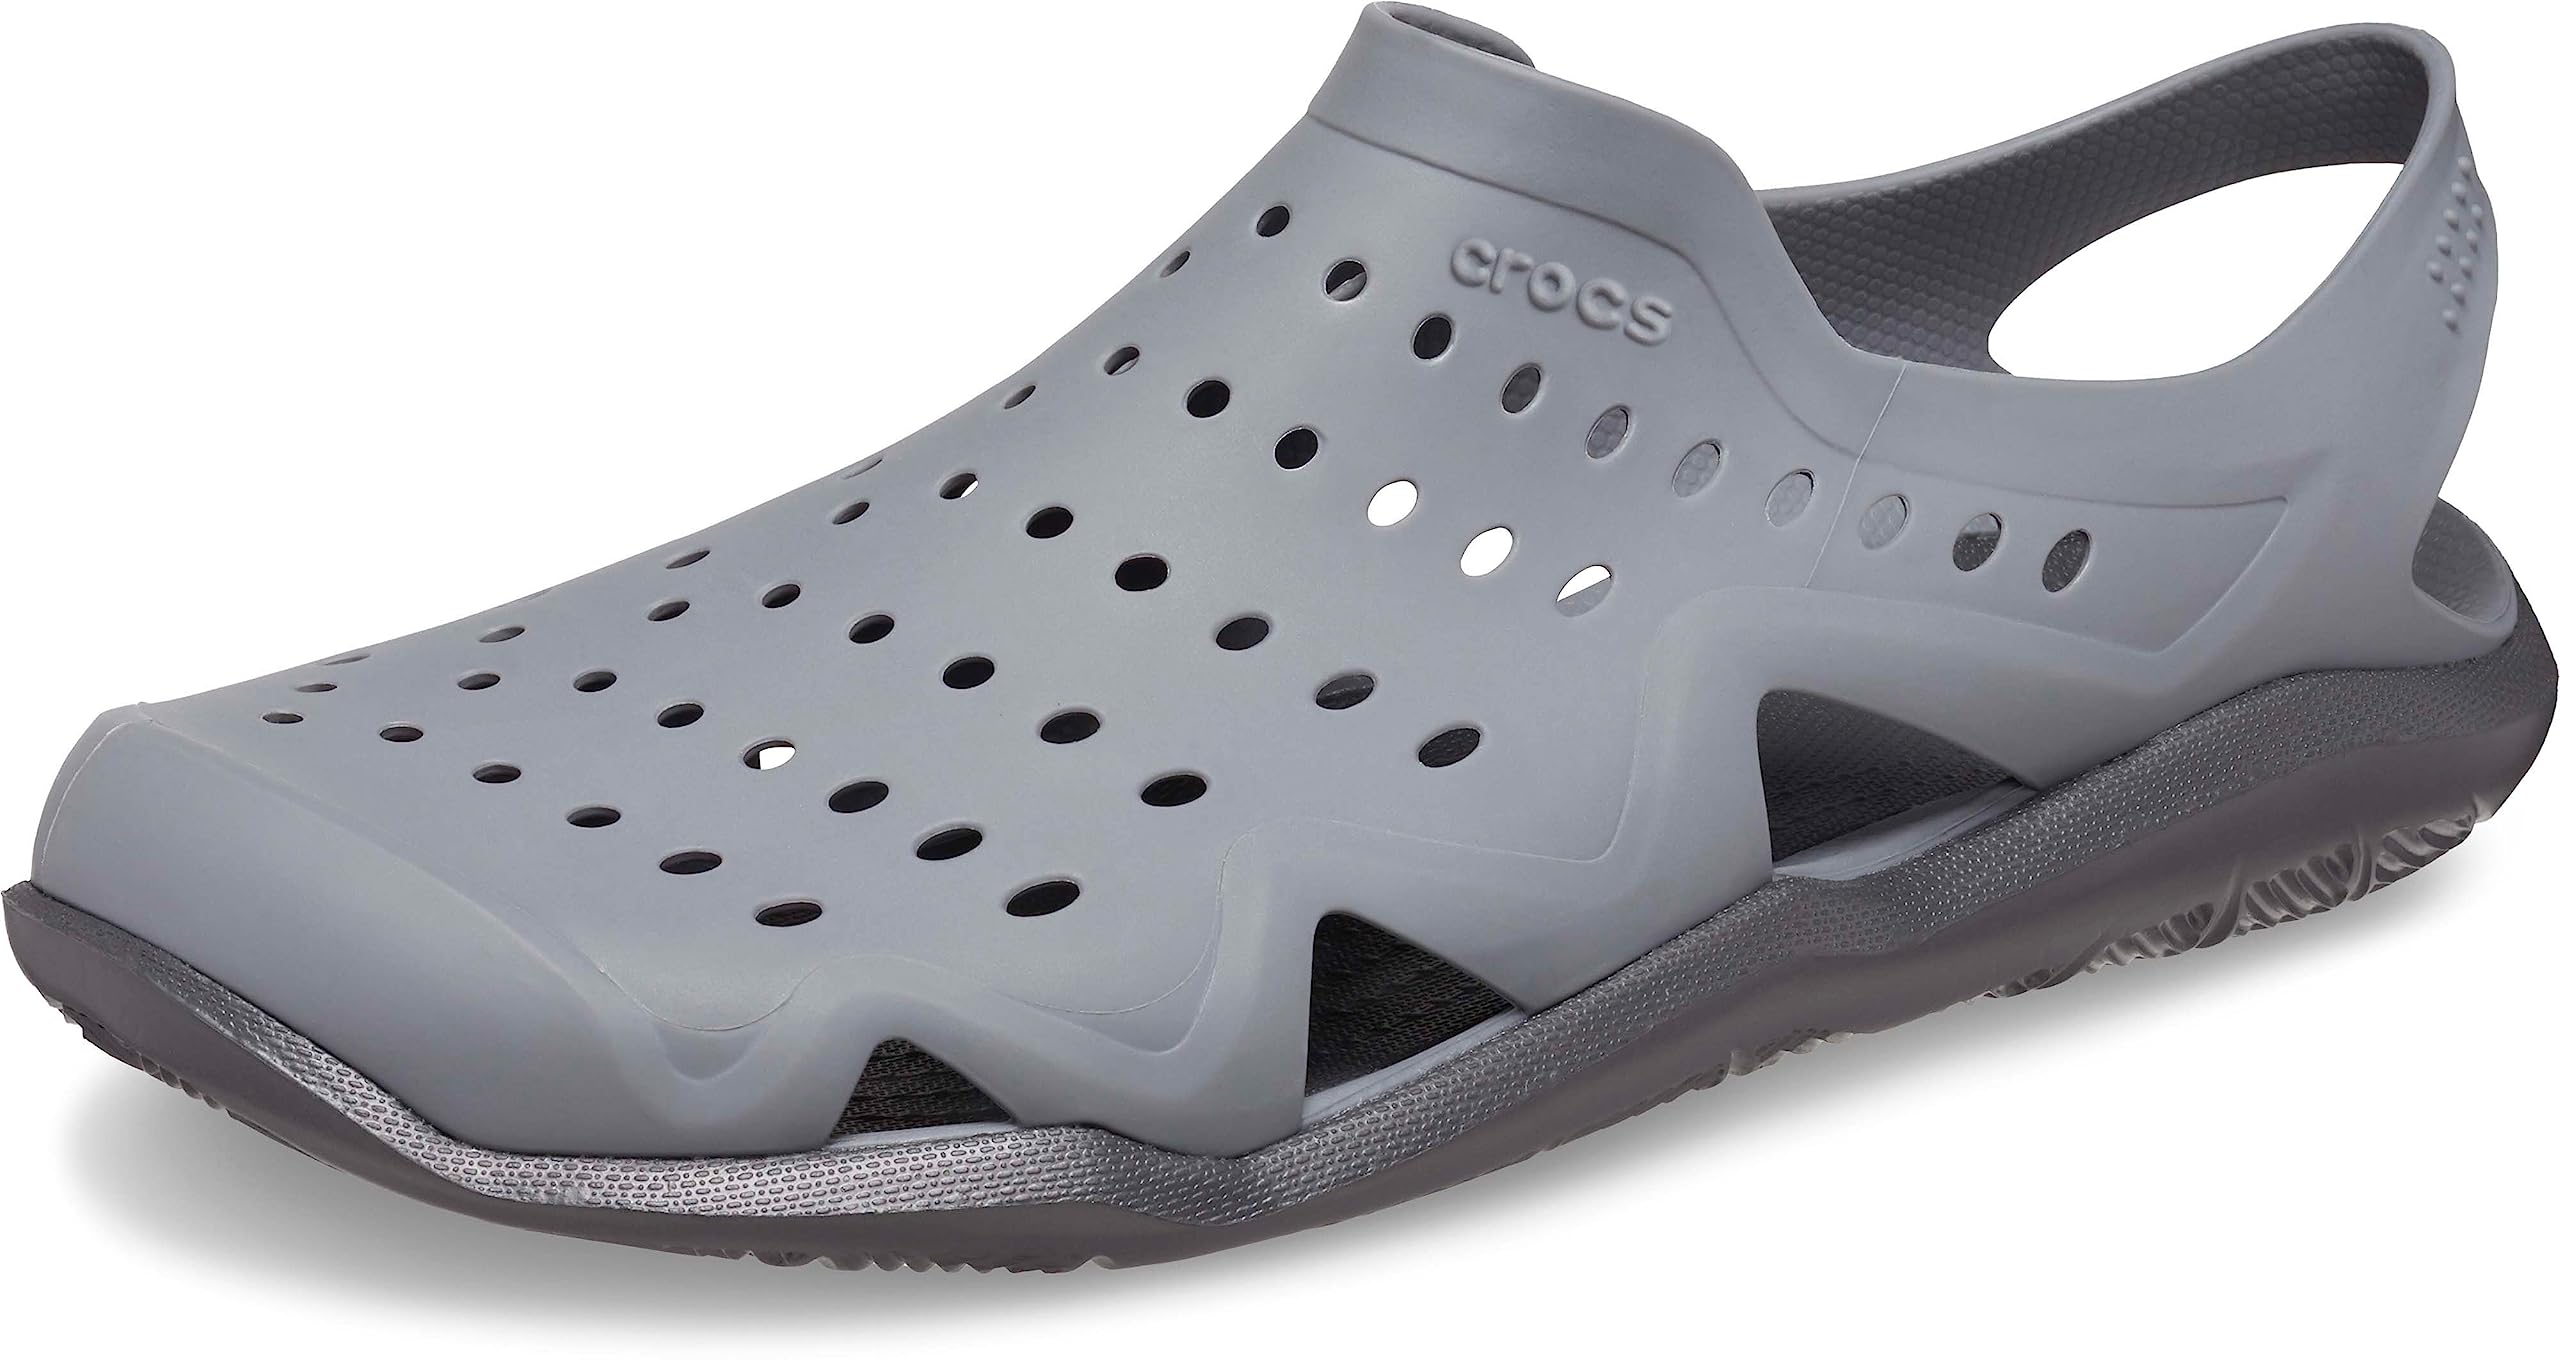 Crocs Men's Swiftwater Wave Sandals, Water Shoes, Charcoal/Graphite, 9 Men